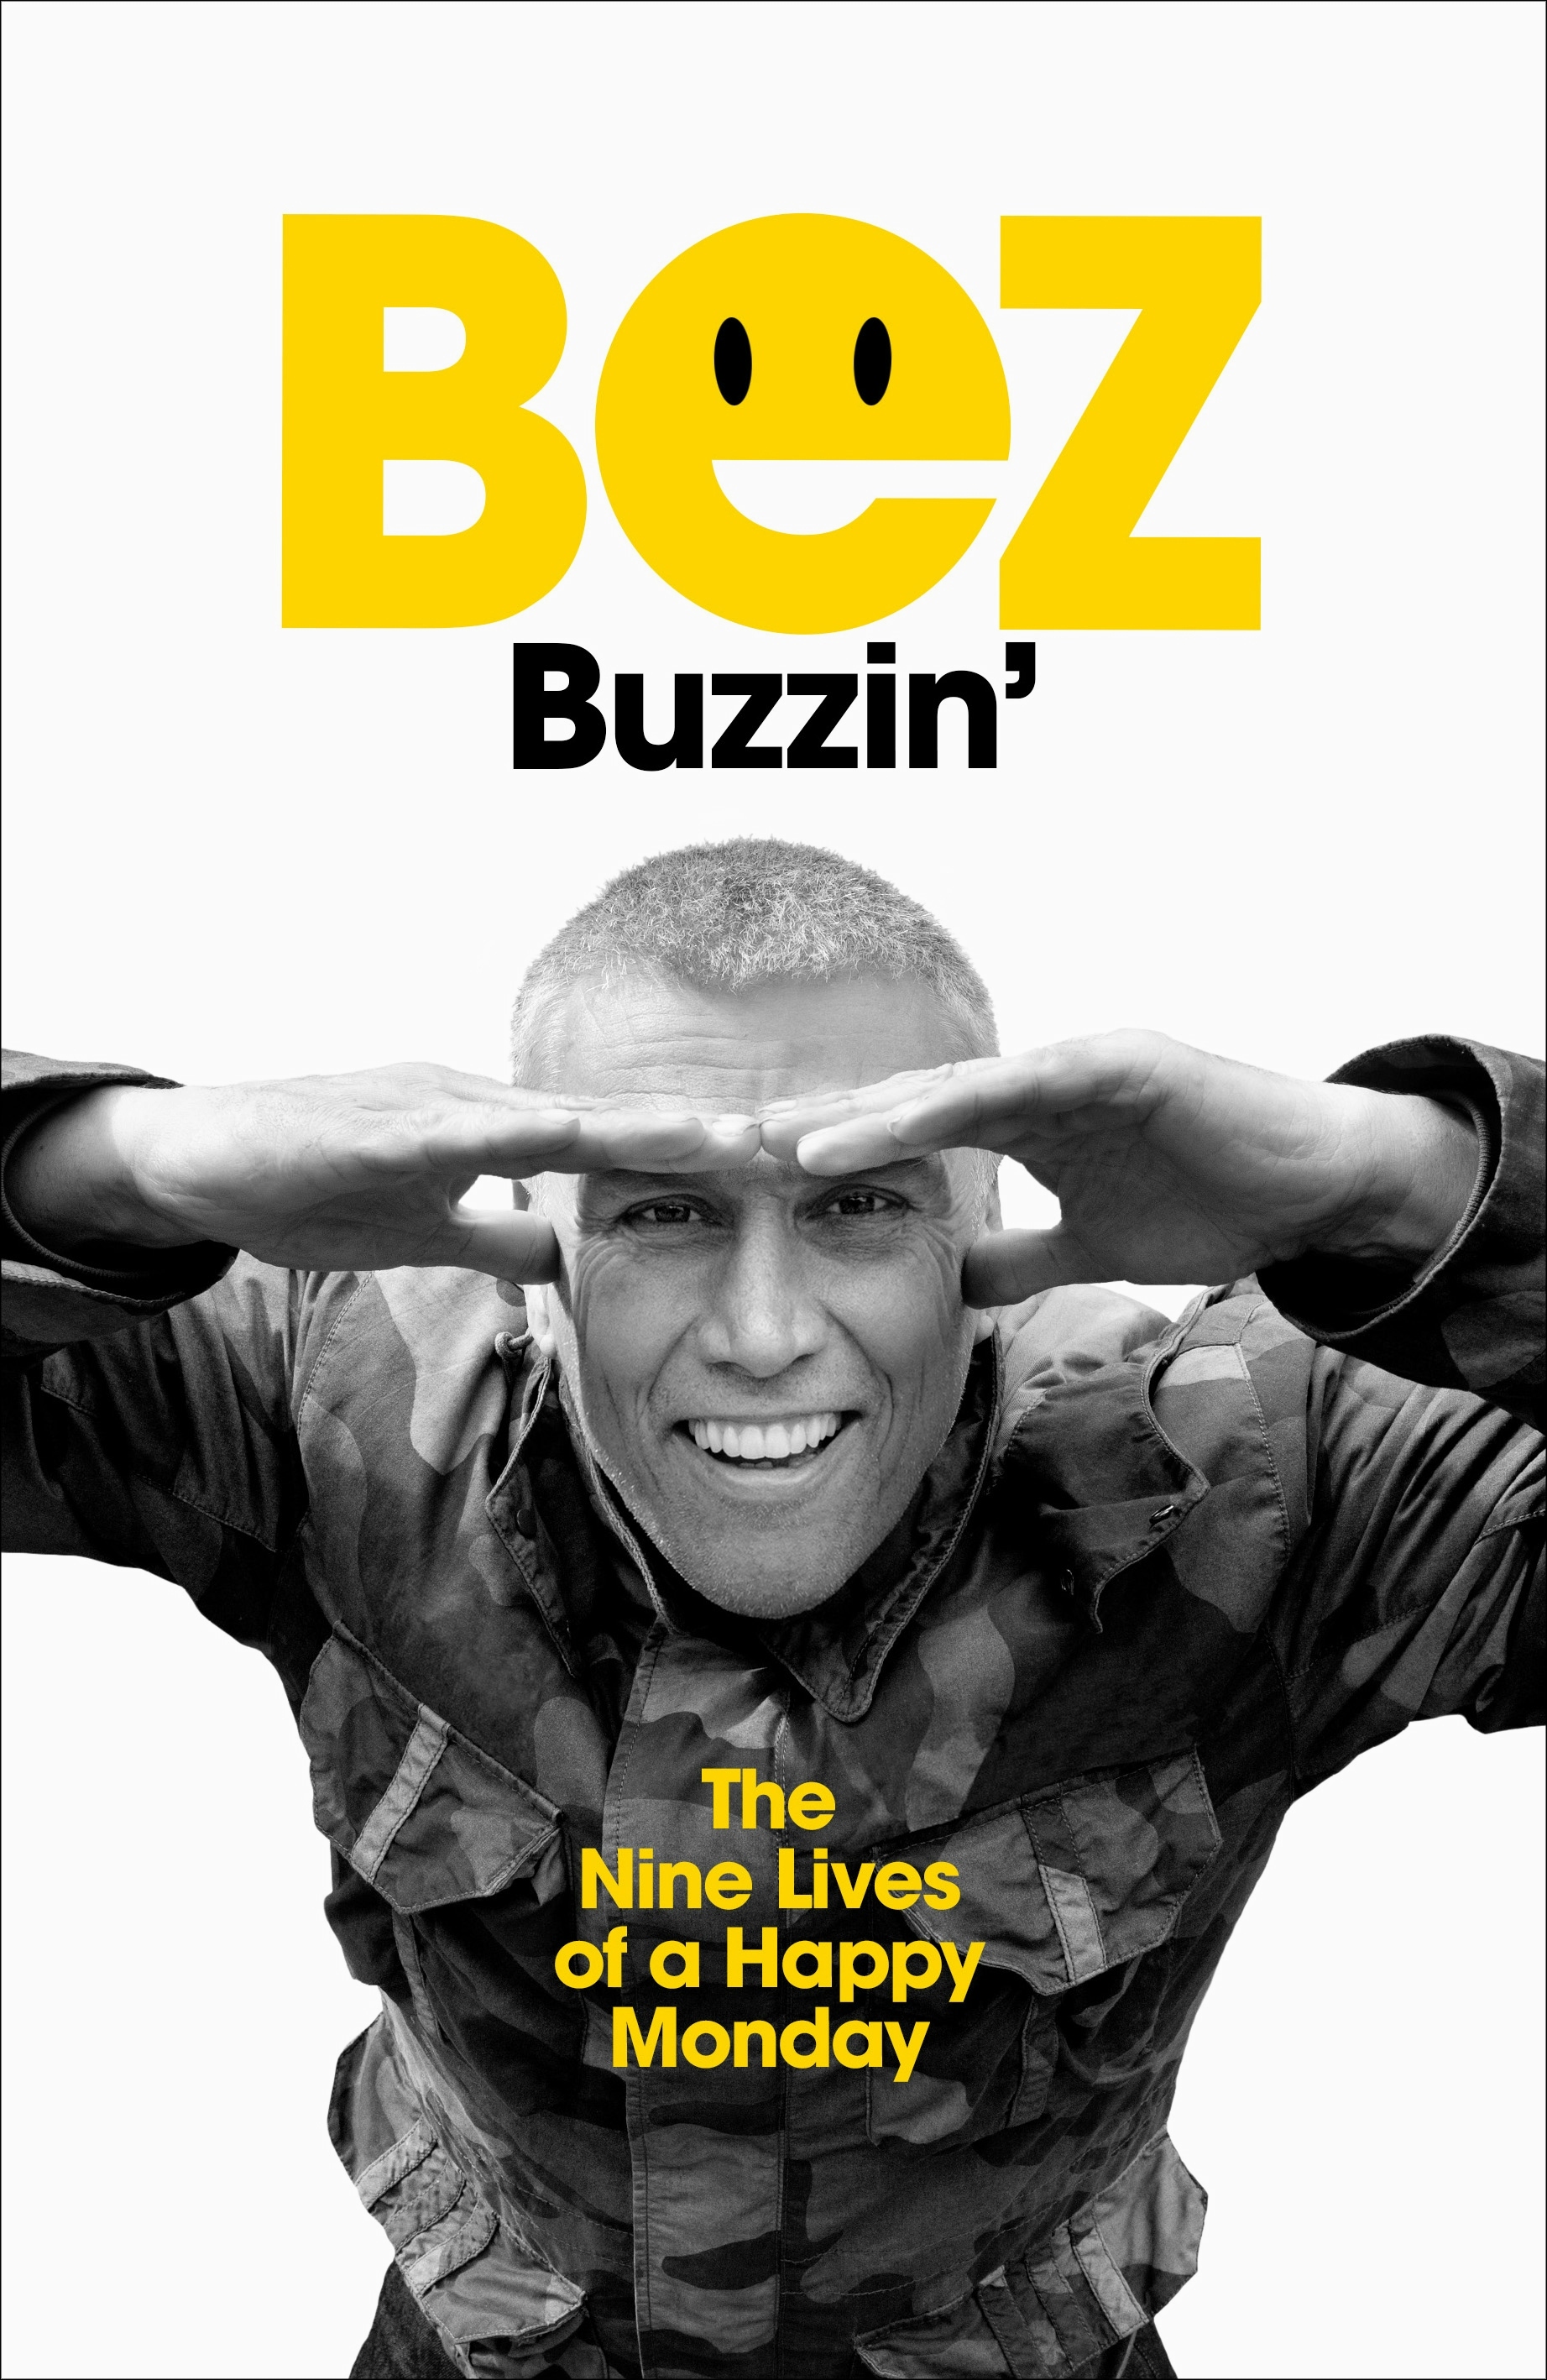 Album artwork for Album artwork for Buzzin' by Bez by Buzzin' - Bez